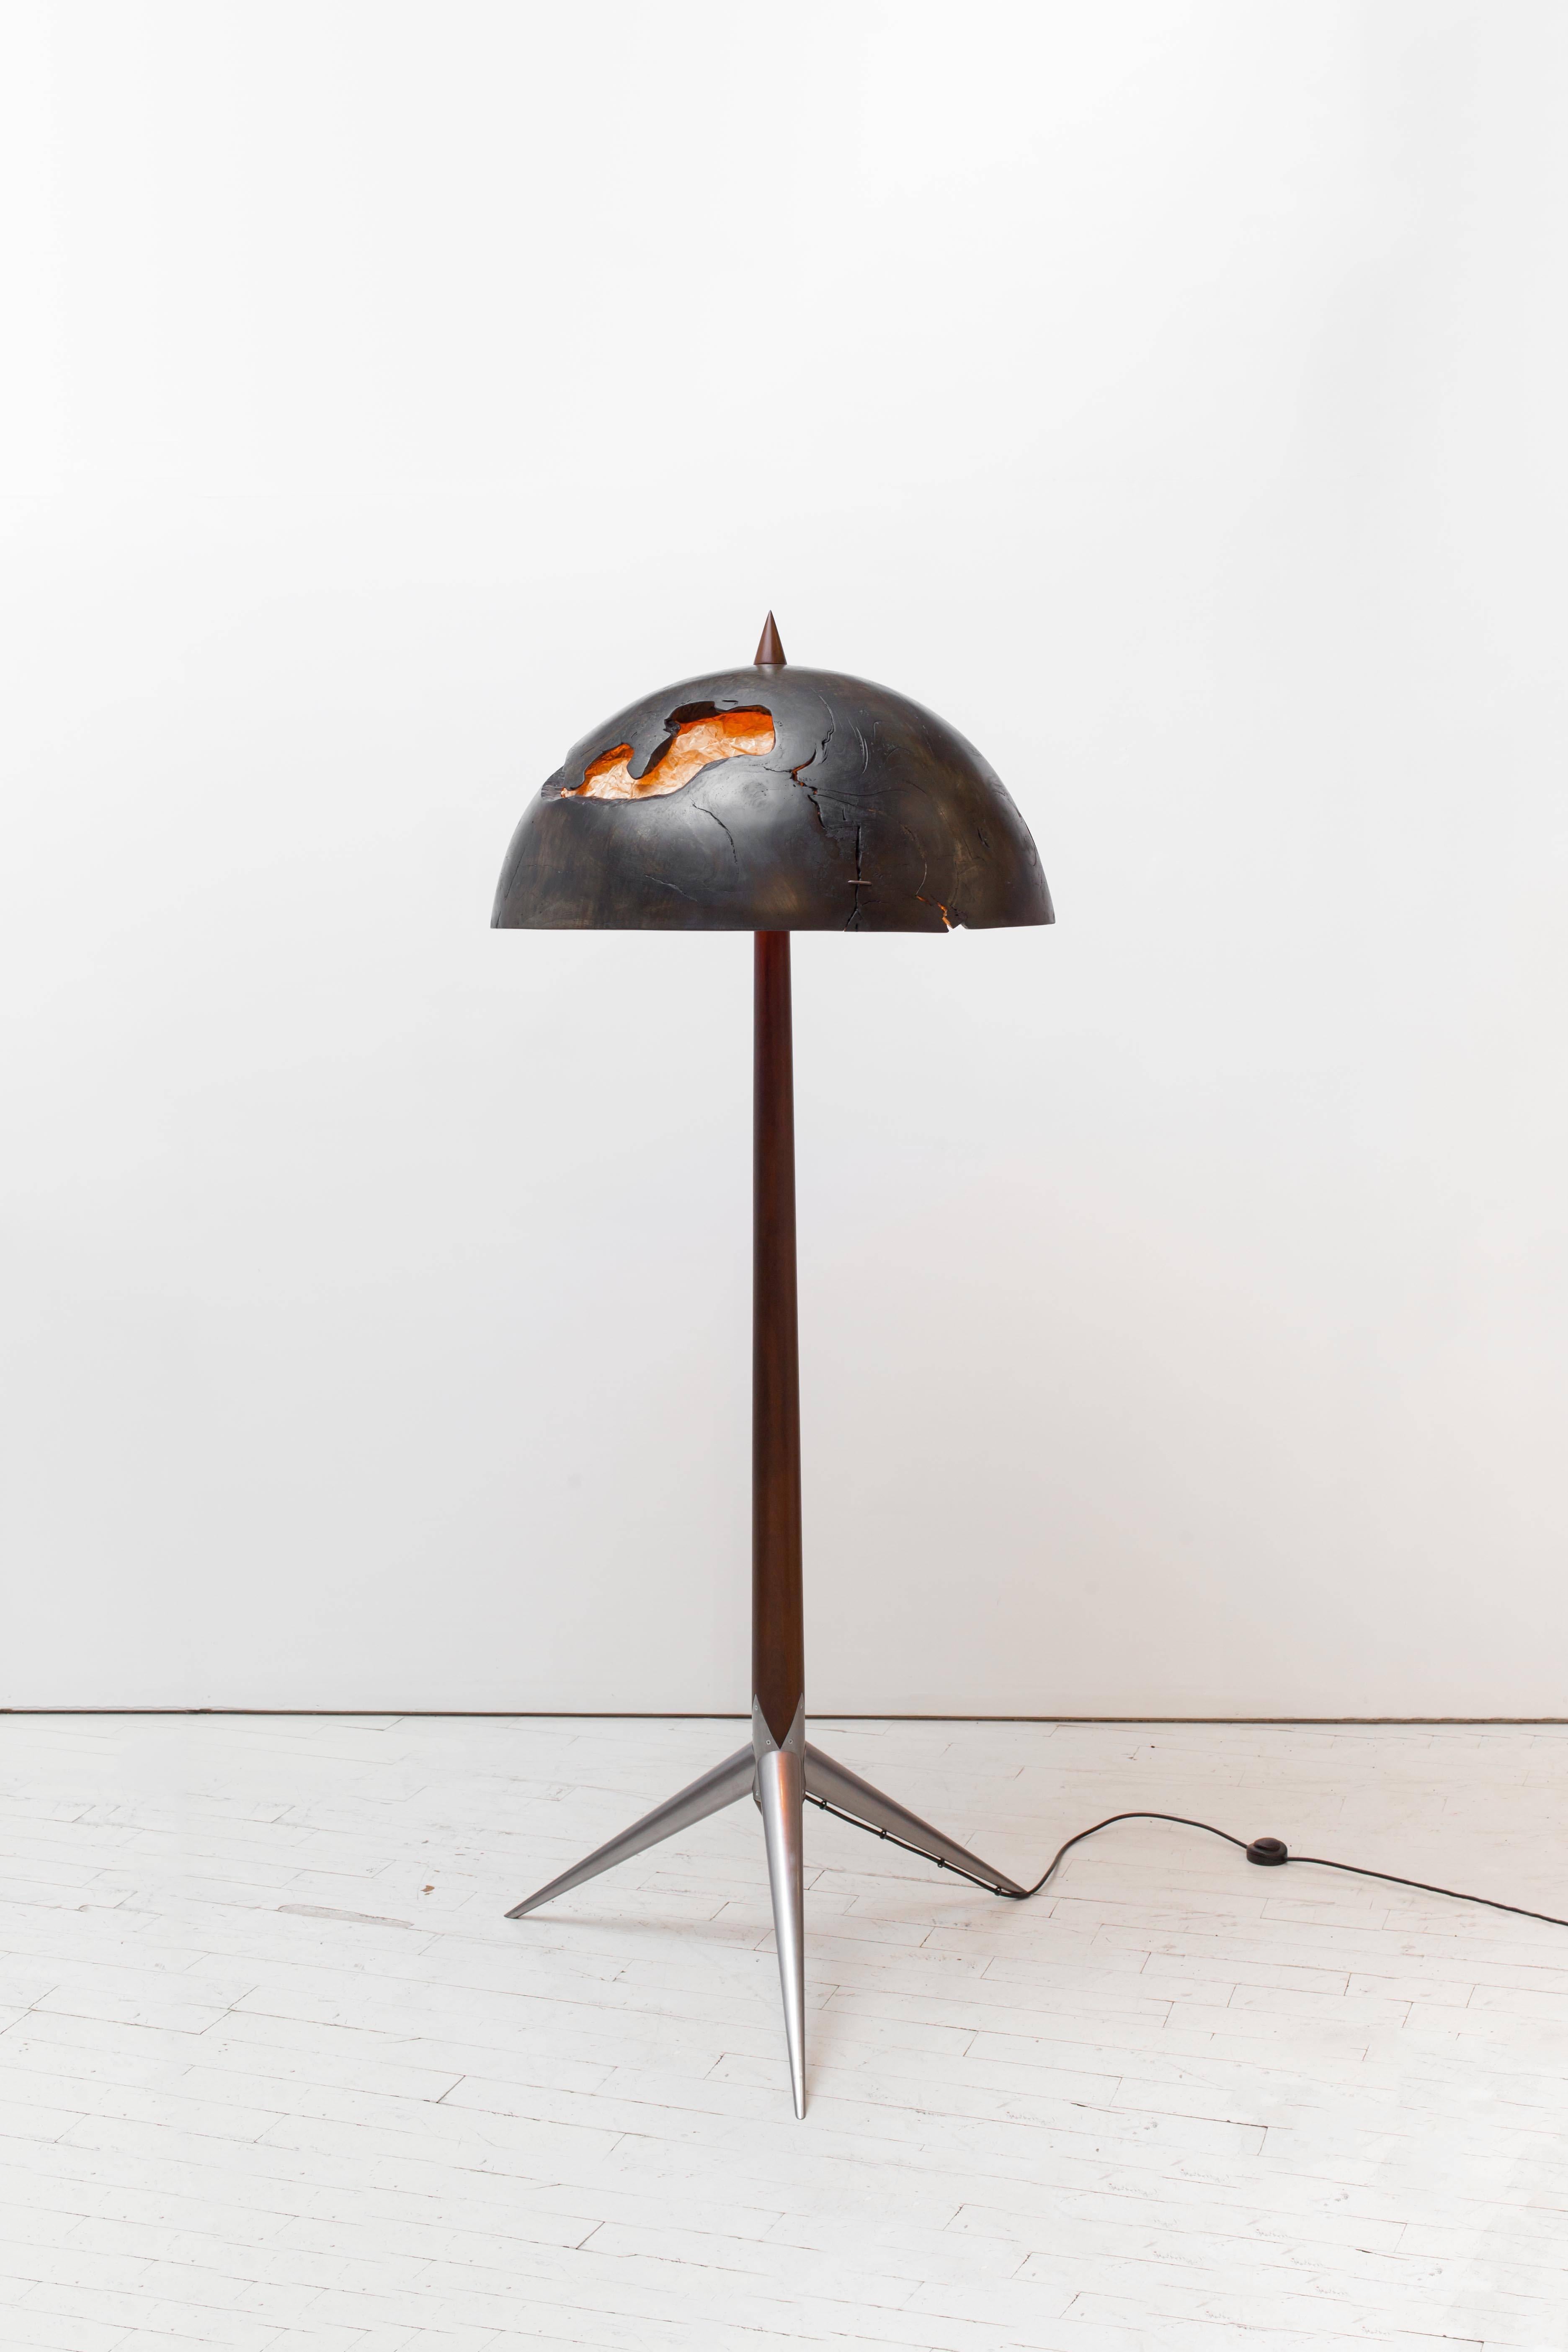 Koguma floor lamp designed in 2015 by Brazilian designer Carlos Motta.
Made in reclaimed Peroba Rosa wood stem, reclaimed mango wood shade, iron, and bronze screen.
Limited edition of 3.